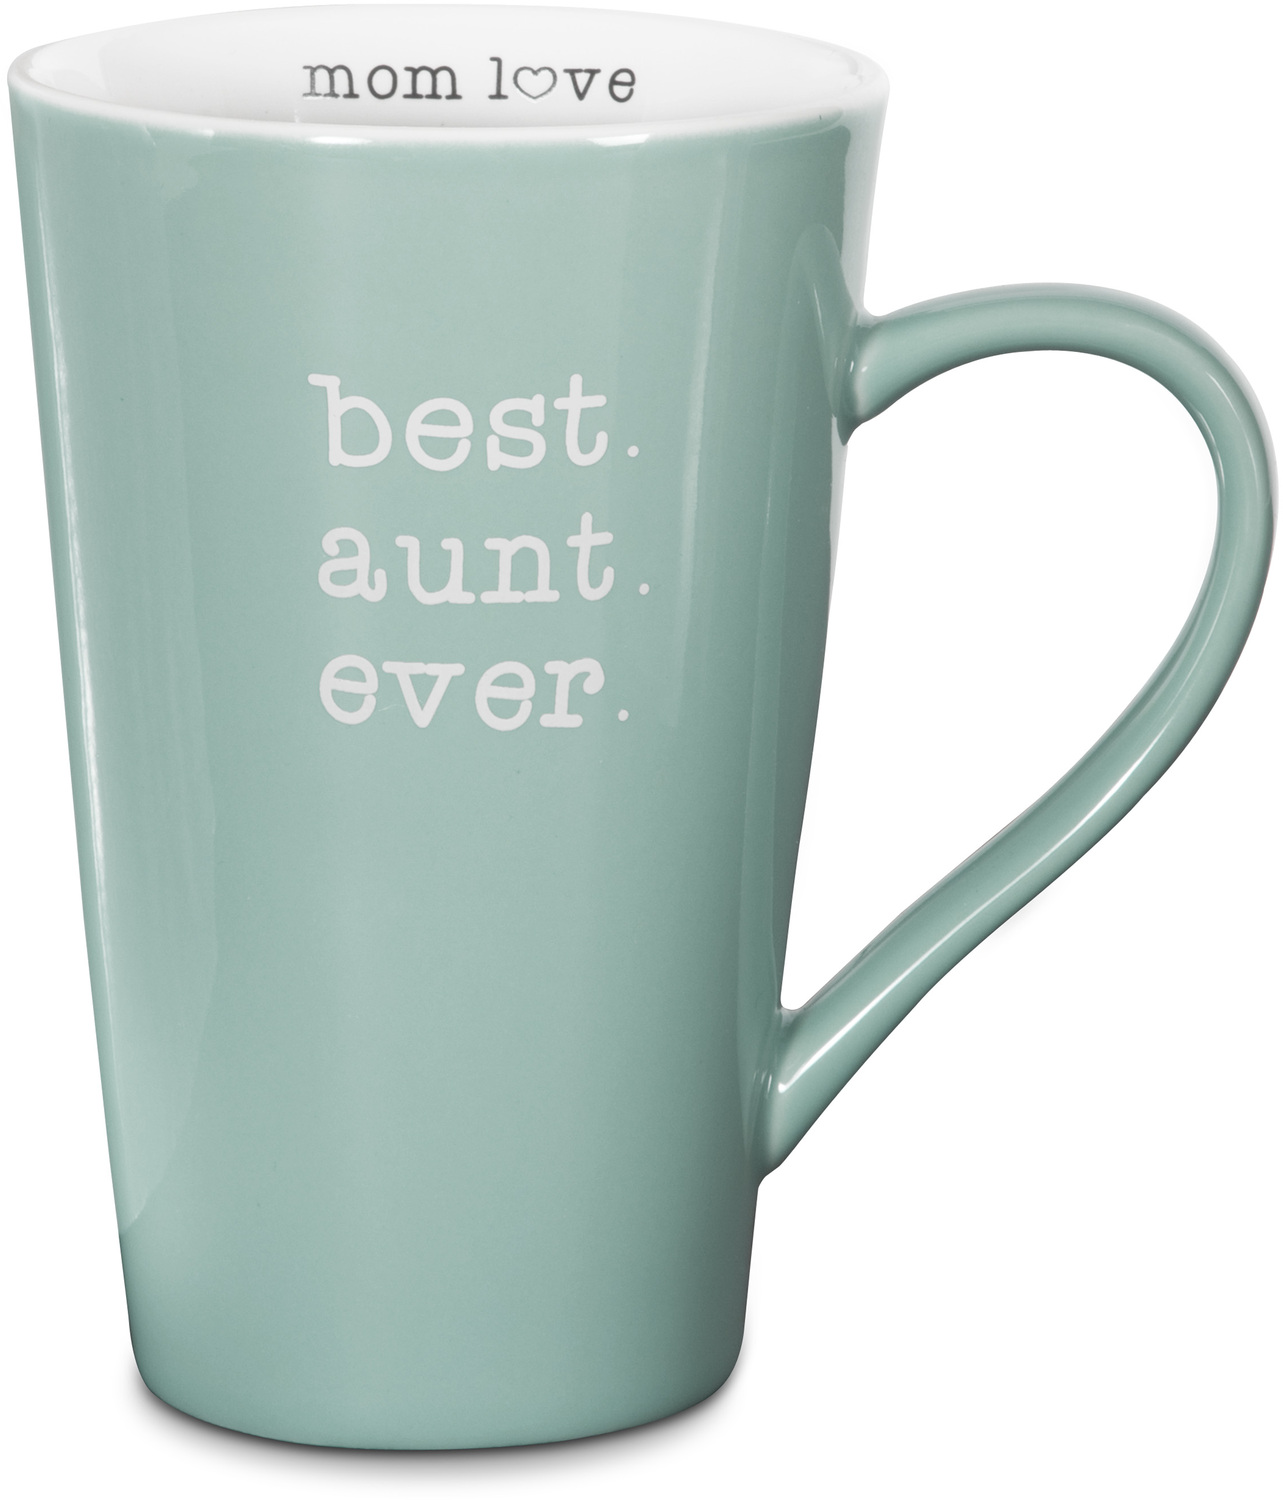 Best Aunt by Mom Love - Best Aunt - 5.5" -  18 oz Latte Mug